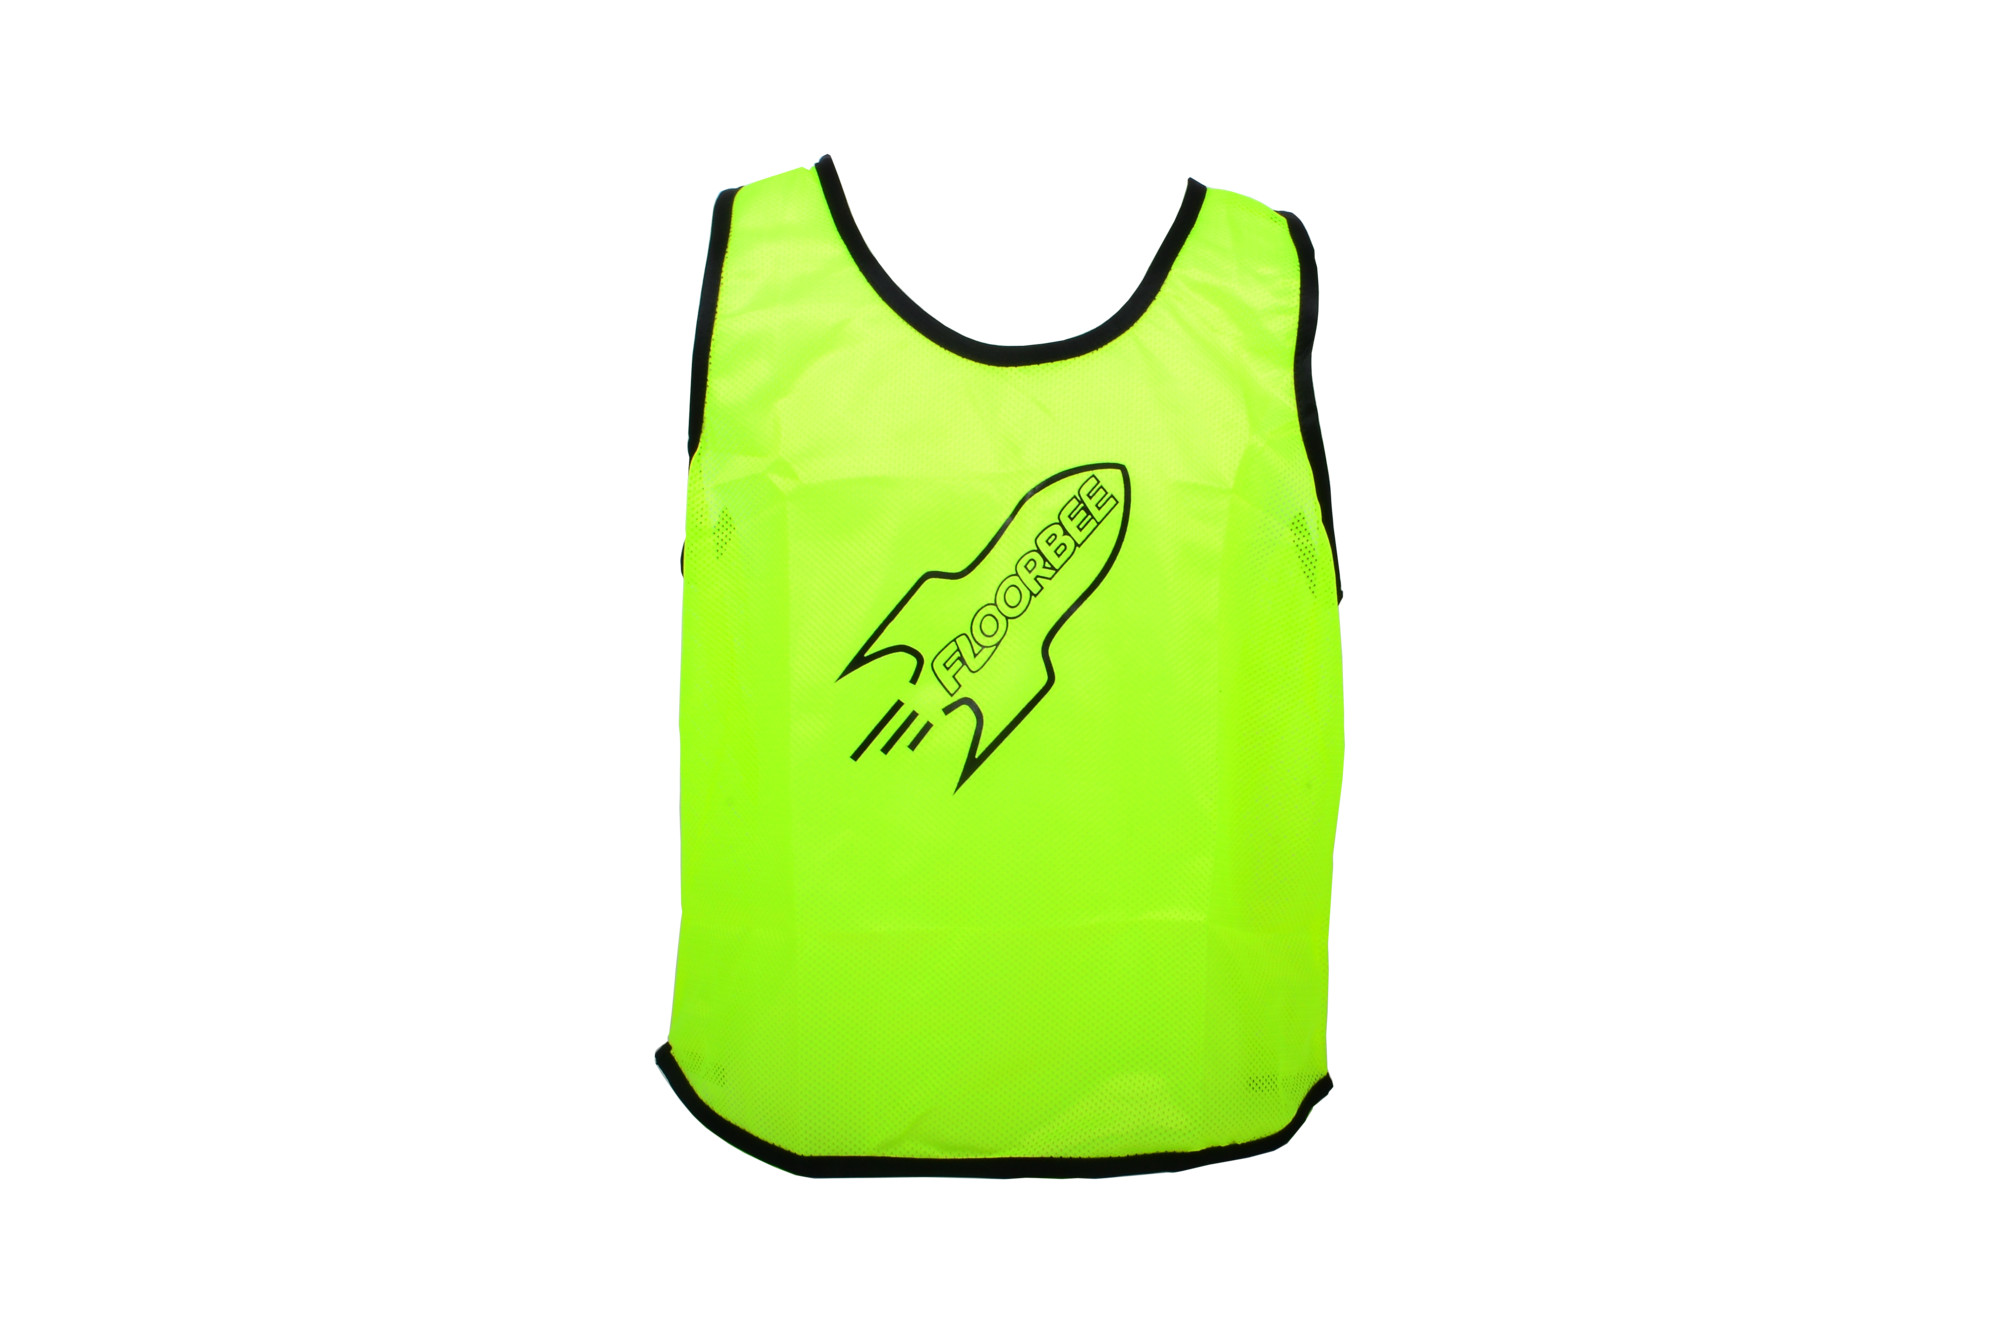 FLOORBEE Air vest 1.0 1 ks, Senior, neonově žlutá